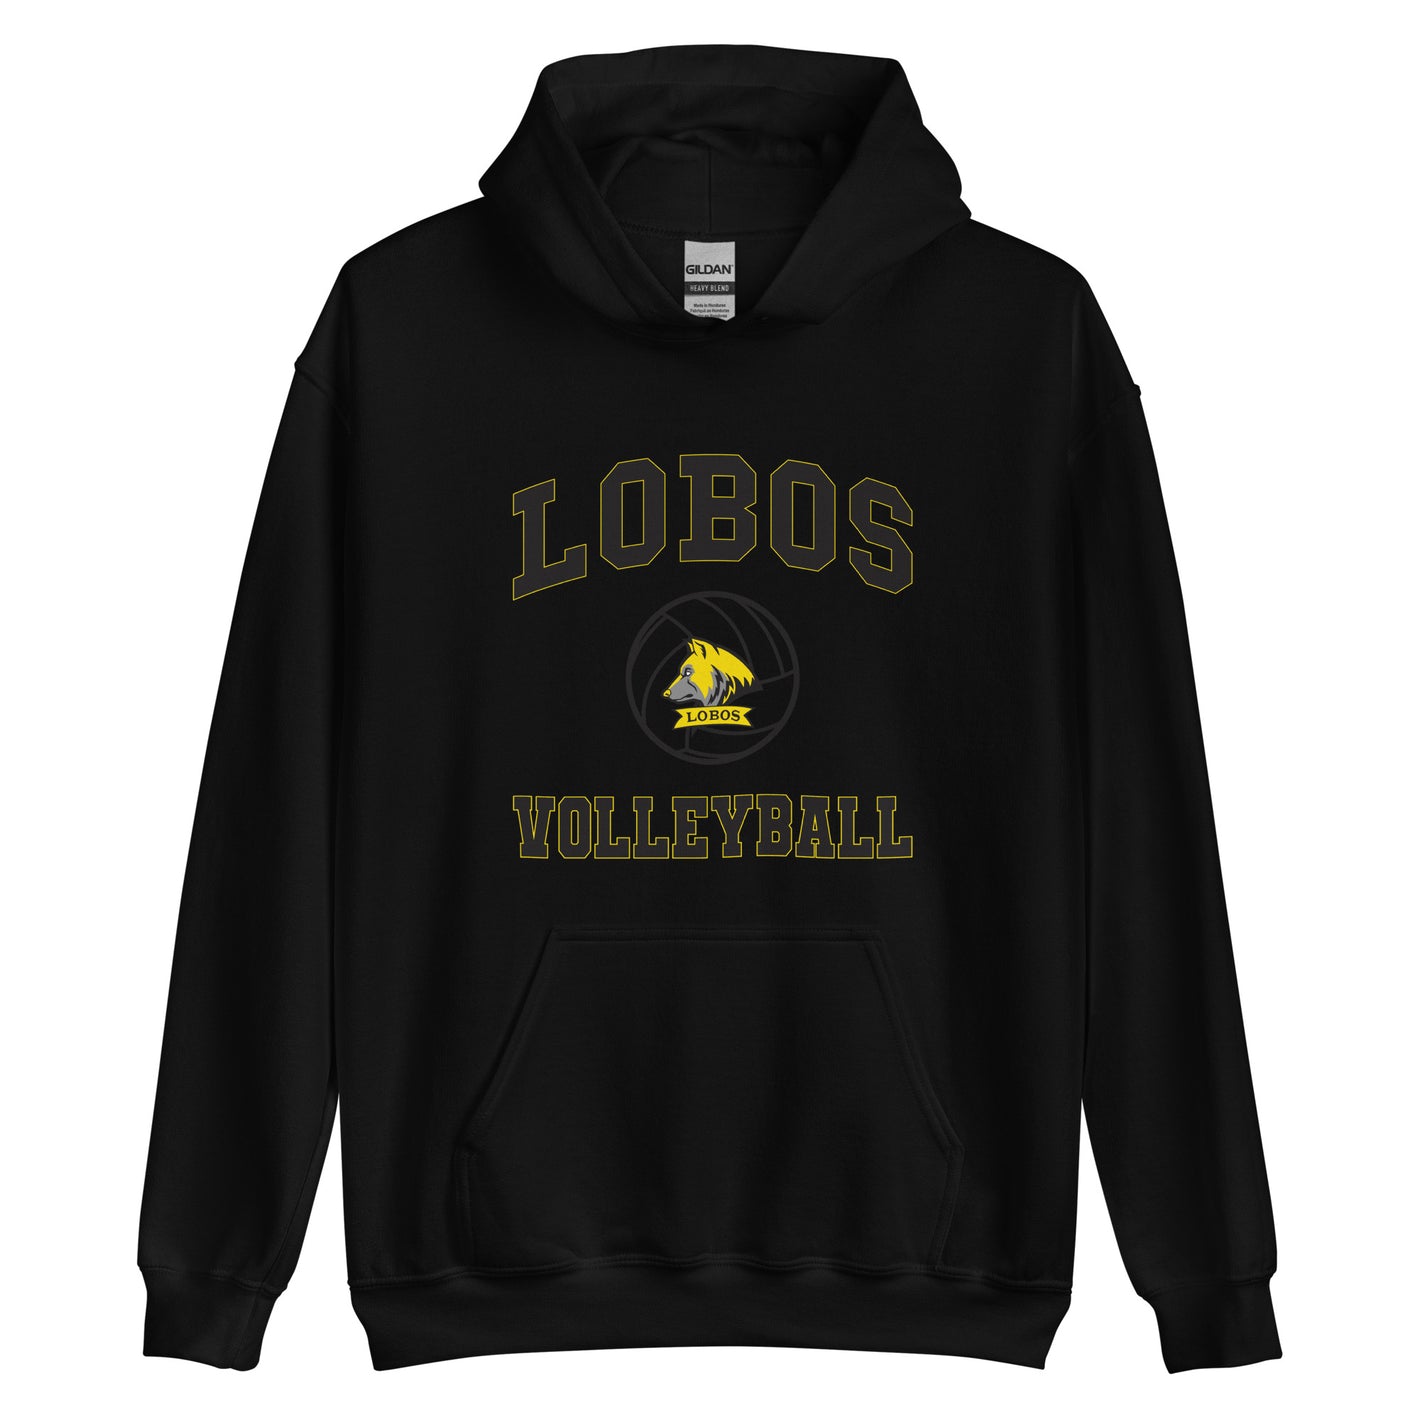 Lobos Volleyball Unisex Hoodie